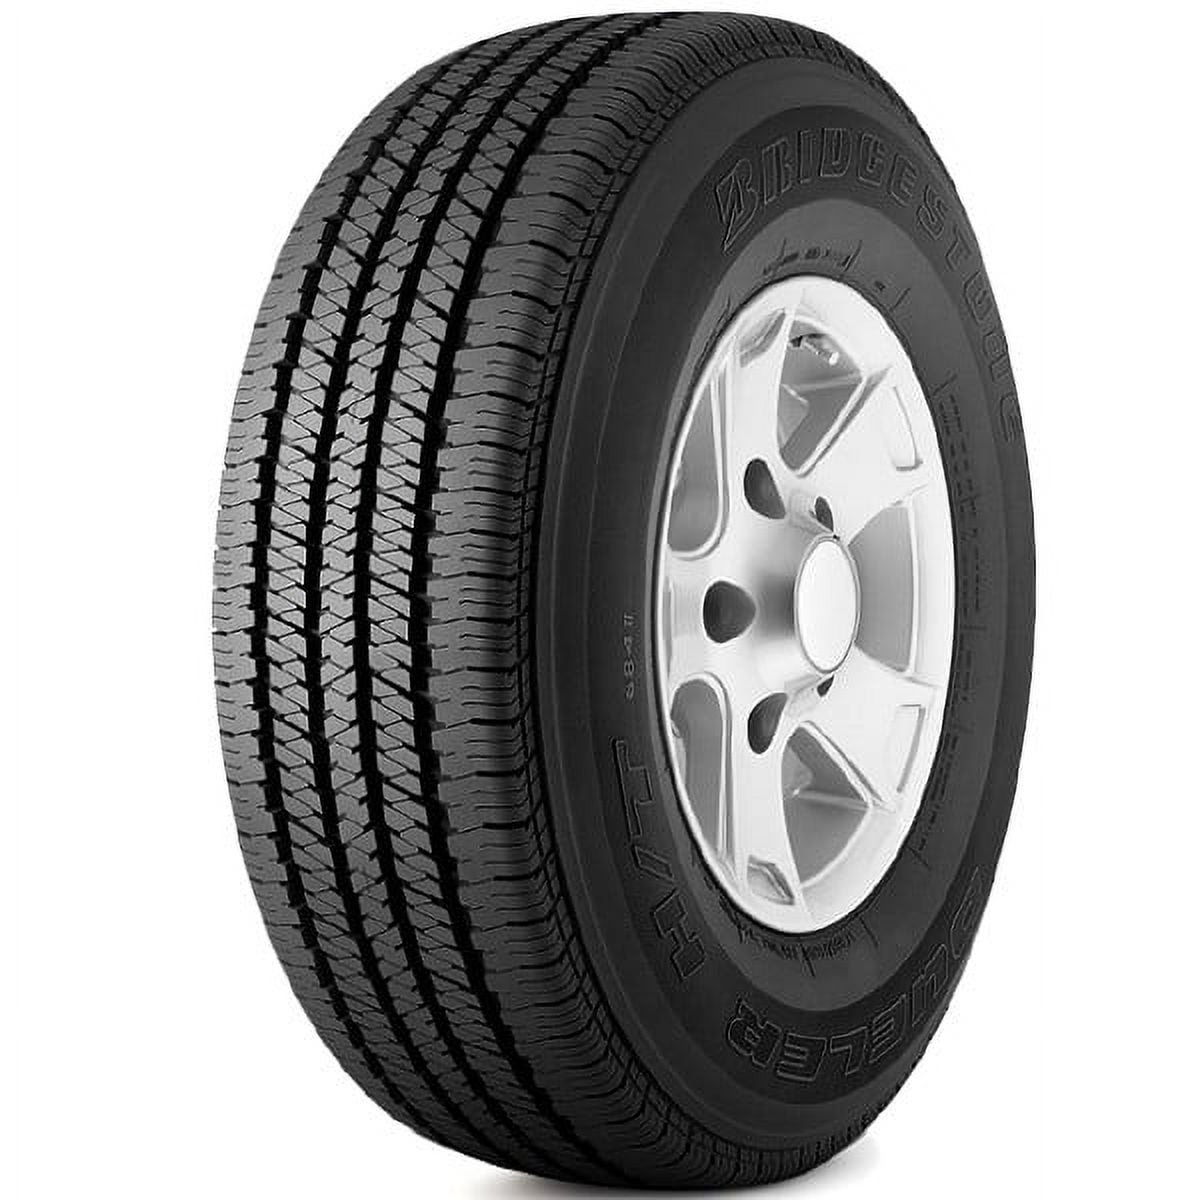 4 Bridgestone DUELER H/T D684 II 275/50R22 111H Tires 60000 Mile Warranty,  New BR149796 / 275/50/22 / 2755022